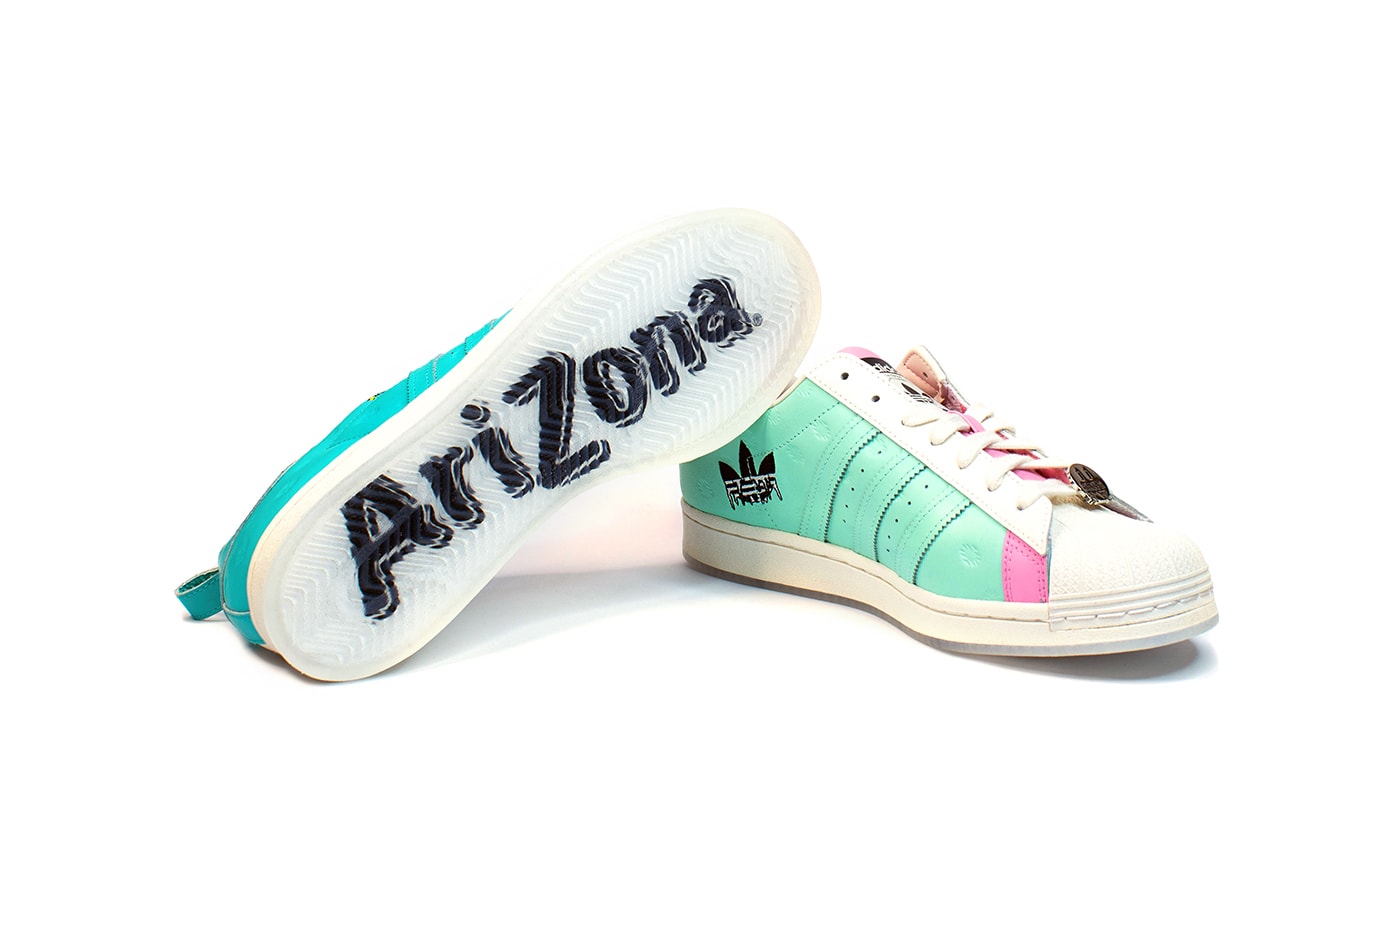 AriZona adidas Originals Superstar 2021 Capsule menswear streetwear sneakers shoes kicks trainers runners ss21 spring summer 2021 iced tea info